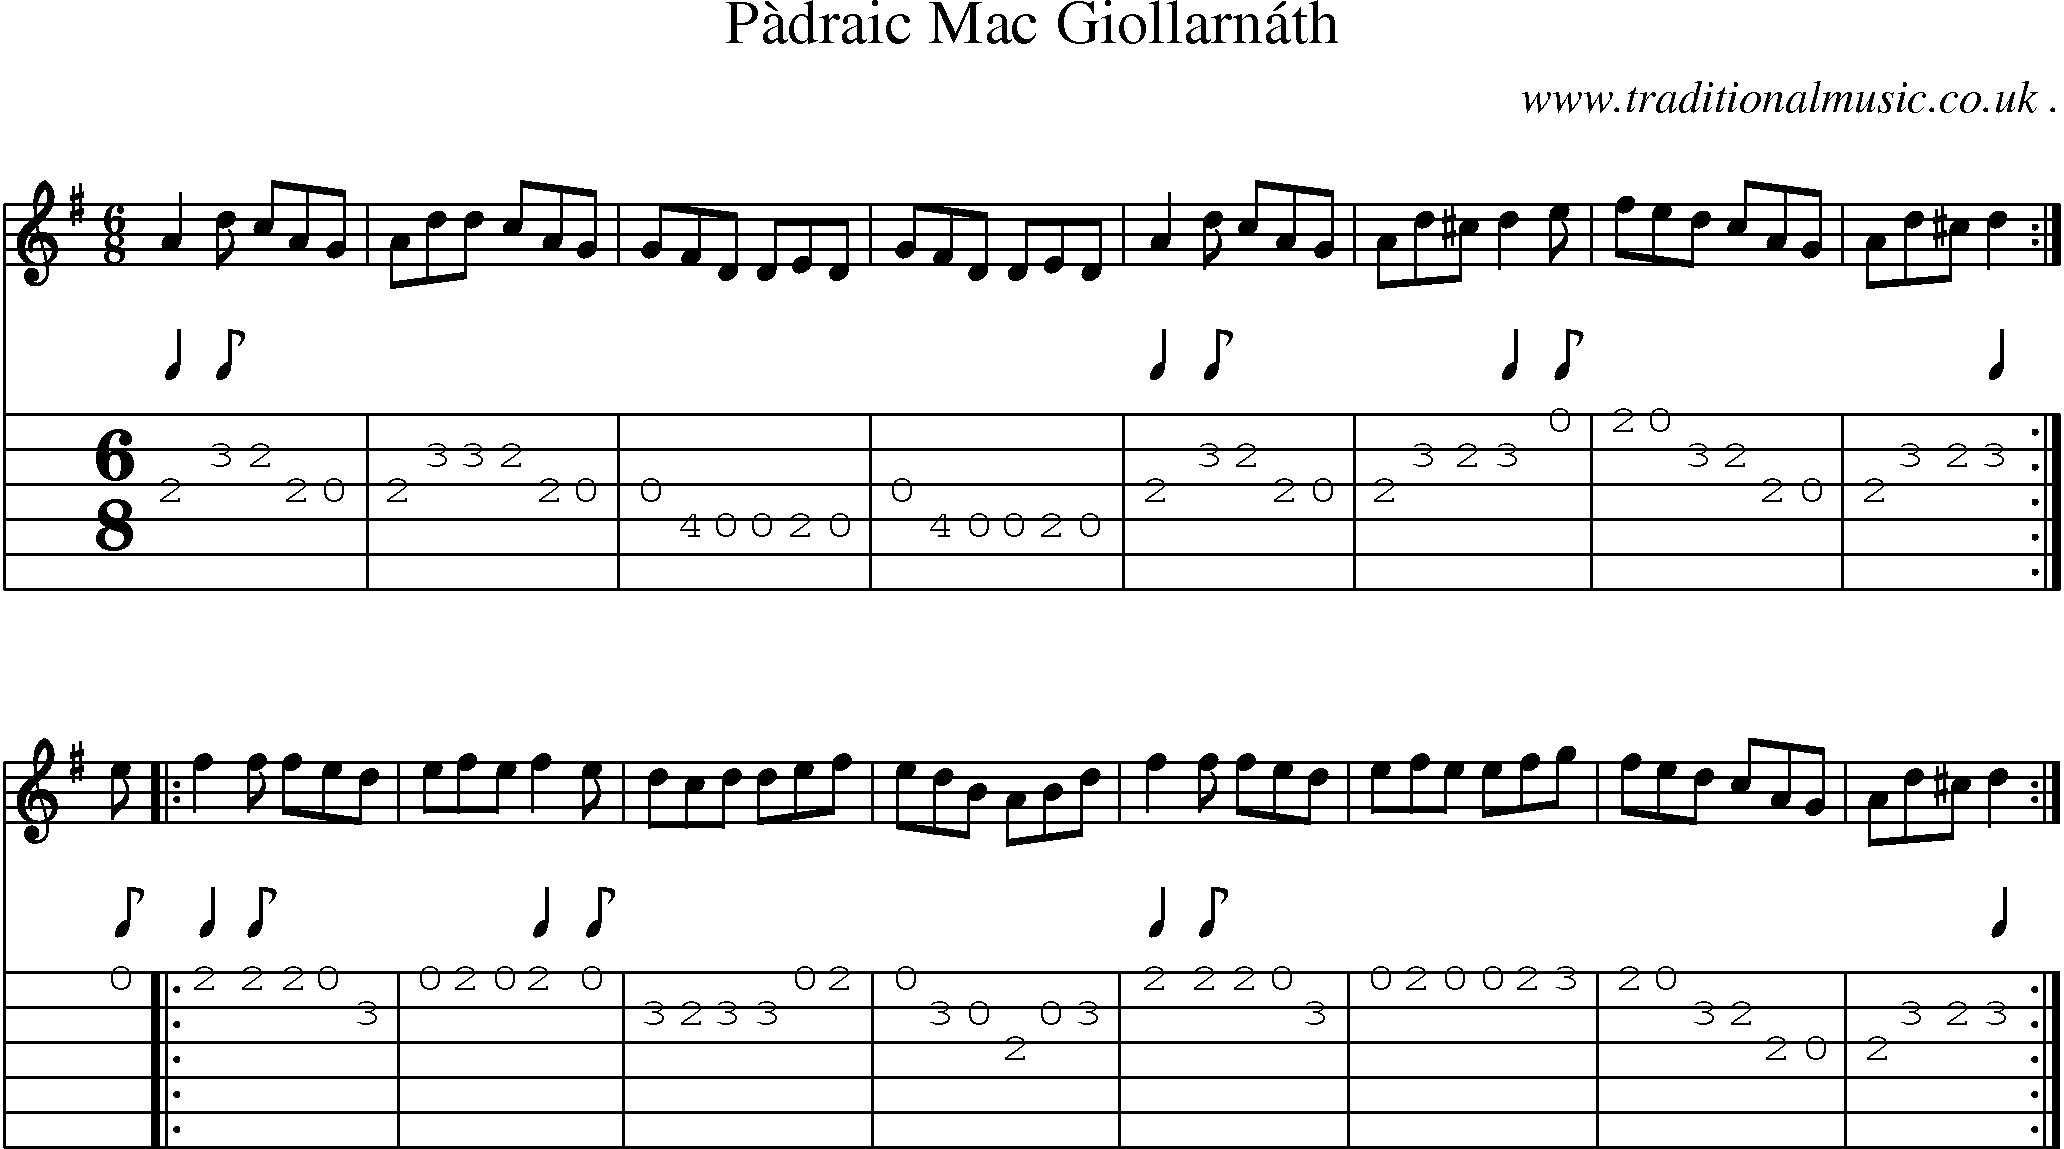 Sheet-Music and Guitar Tabs for P`adraic Mac Giollarnath